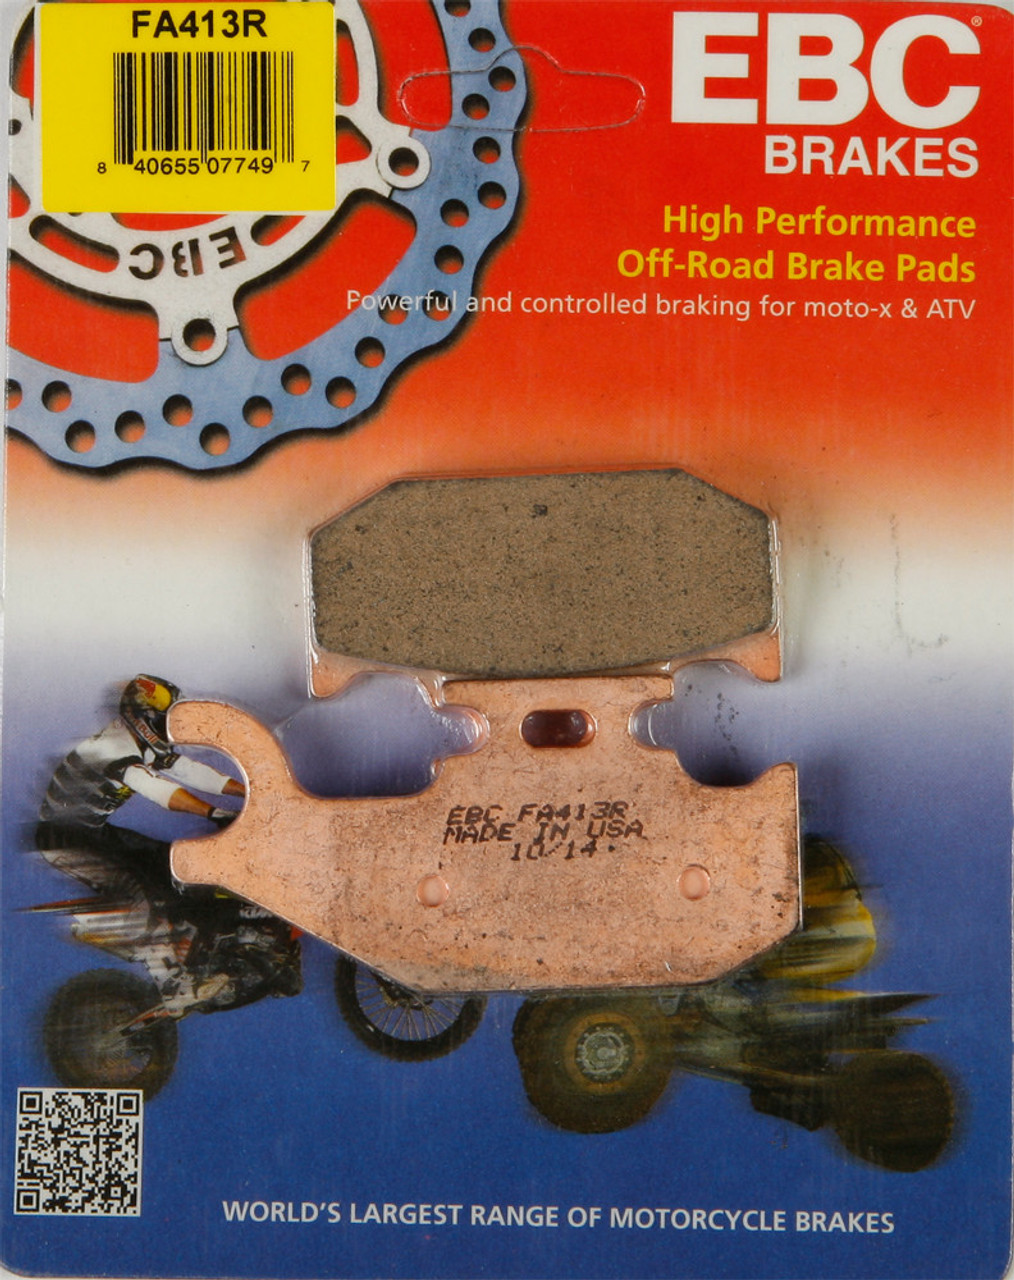 Ebc New Standard Brake Pads, 15-413R